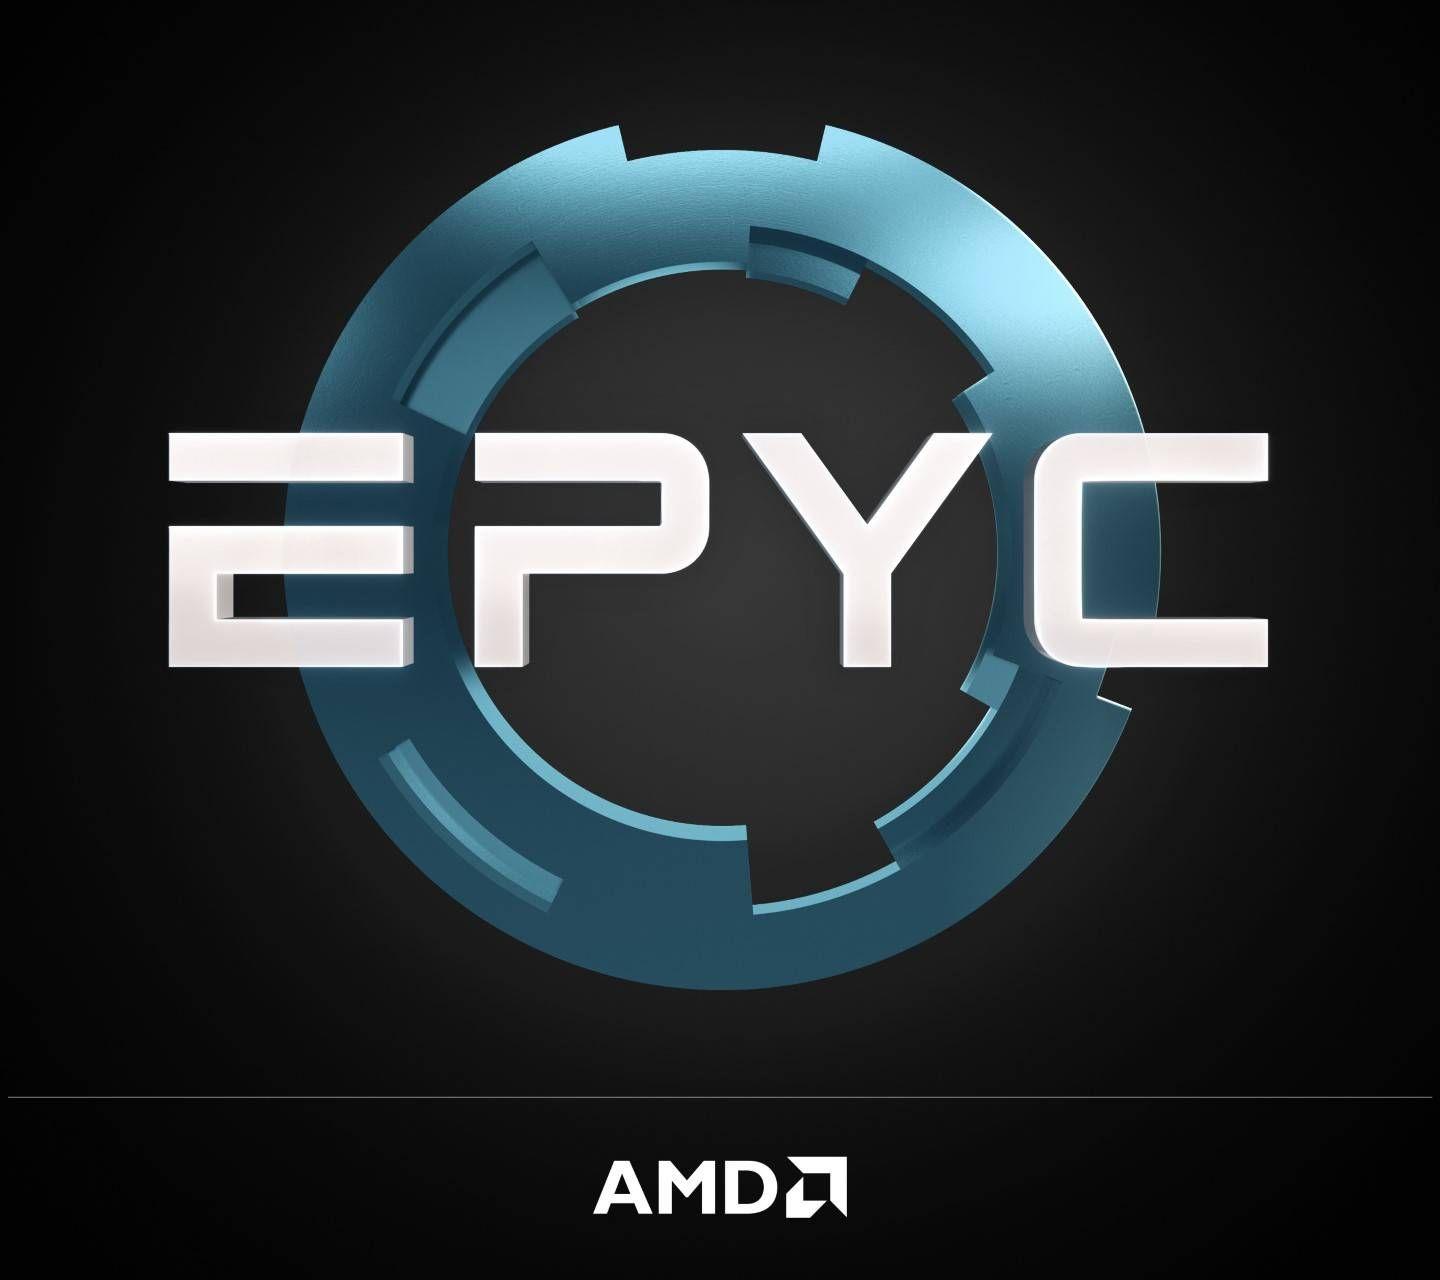 AMD Epyc Logo - AMD EPYC Logo Wallpaper